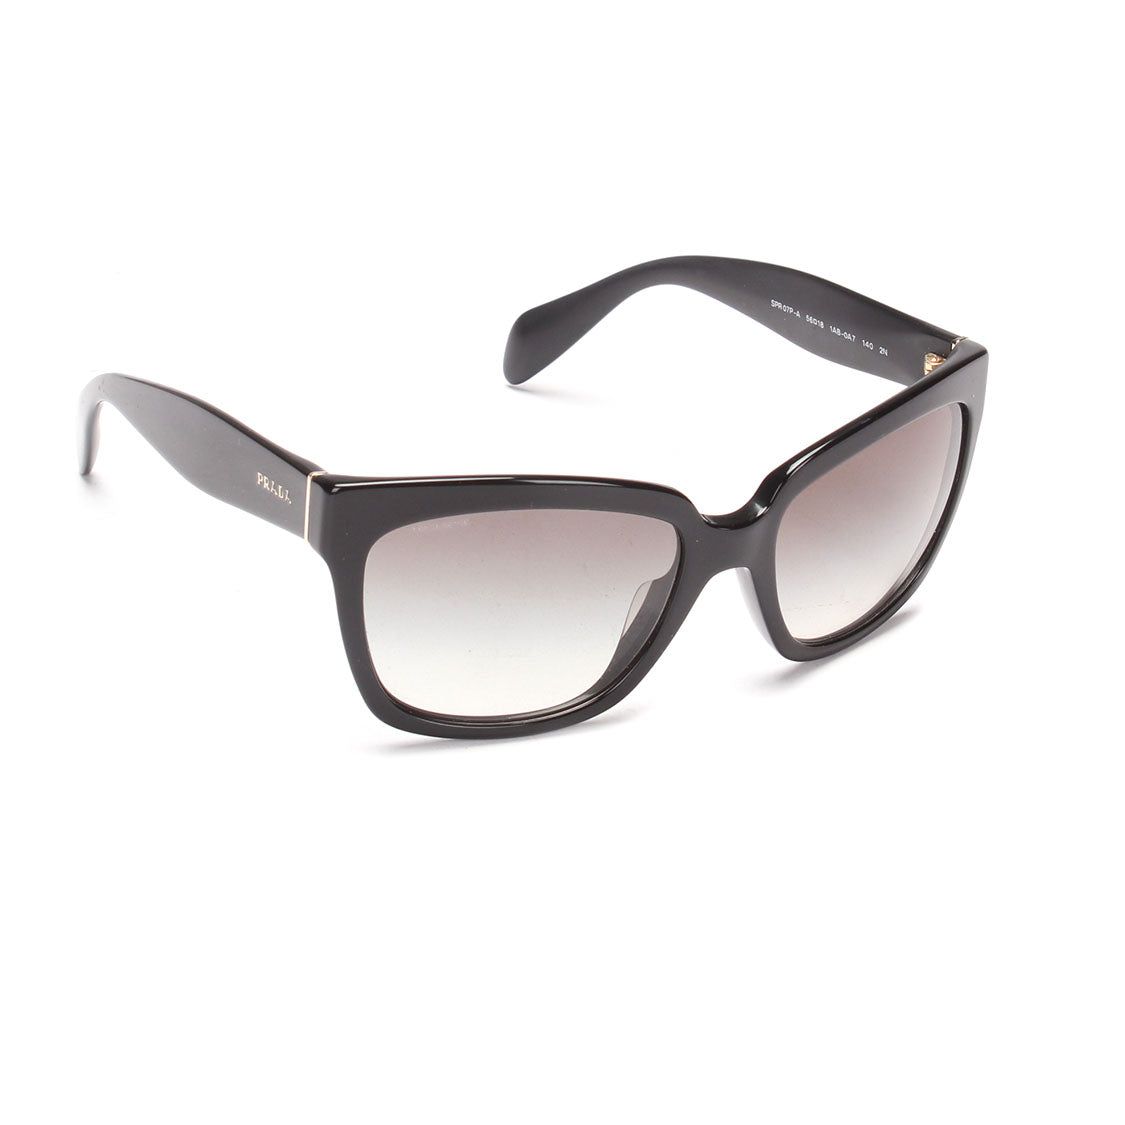 Tinted Sunglasses SPR 07